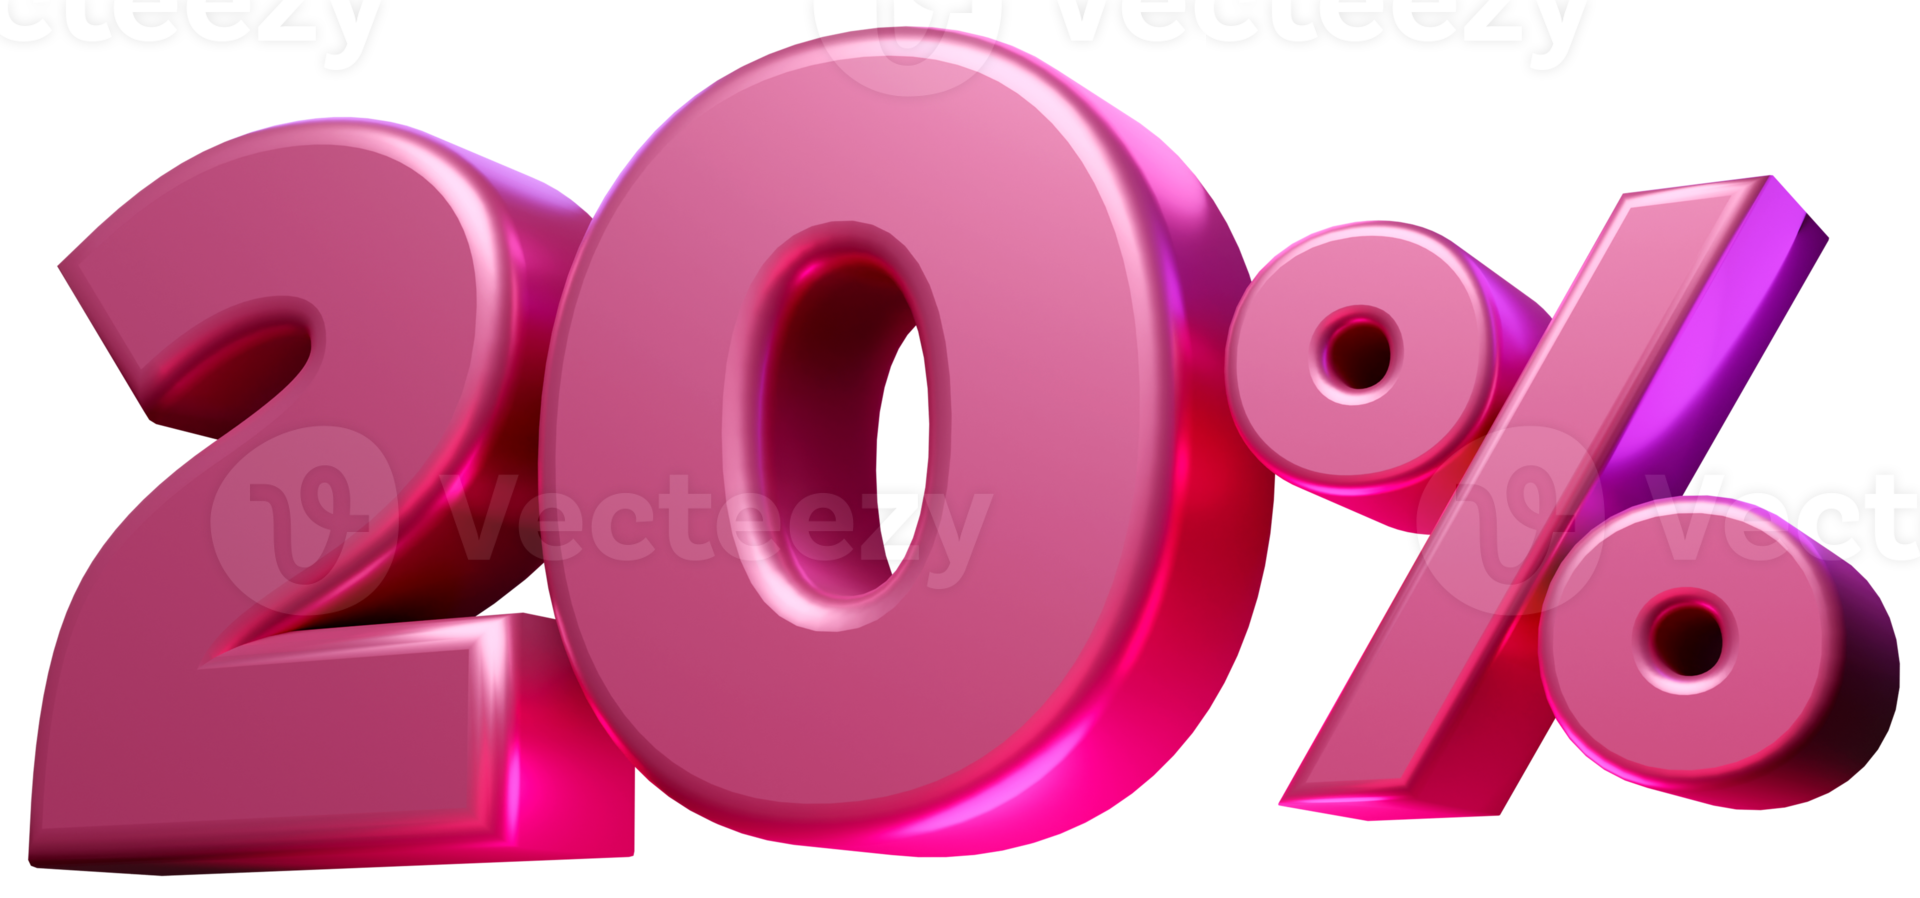 3d render 20 percent icon sign symbol promotion sales discount element illustration png